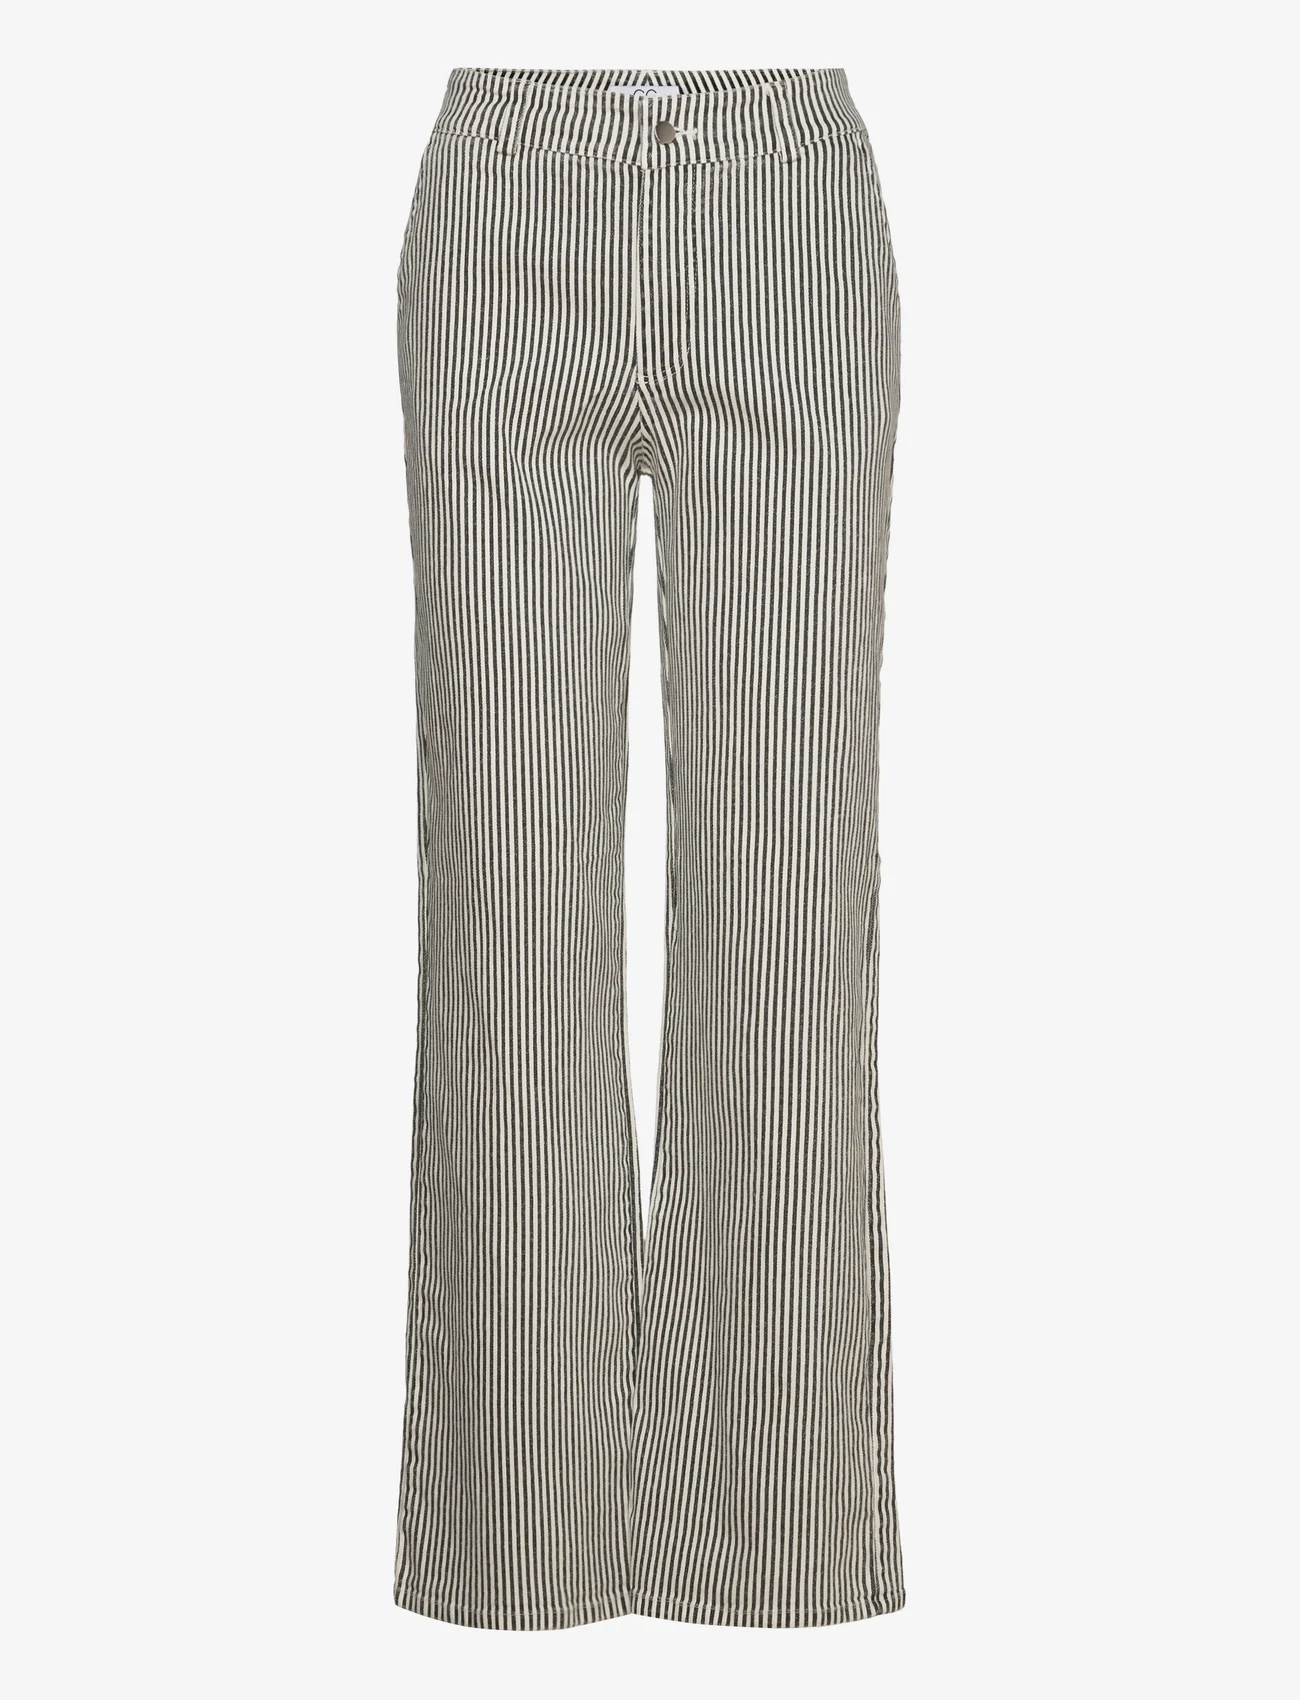 Coster Copenhagen - CC Heart MATHILDE striped pants - feestelijke kleding voor outlet-prijzen - off white/black stripe - 0